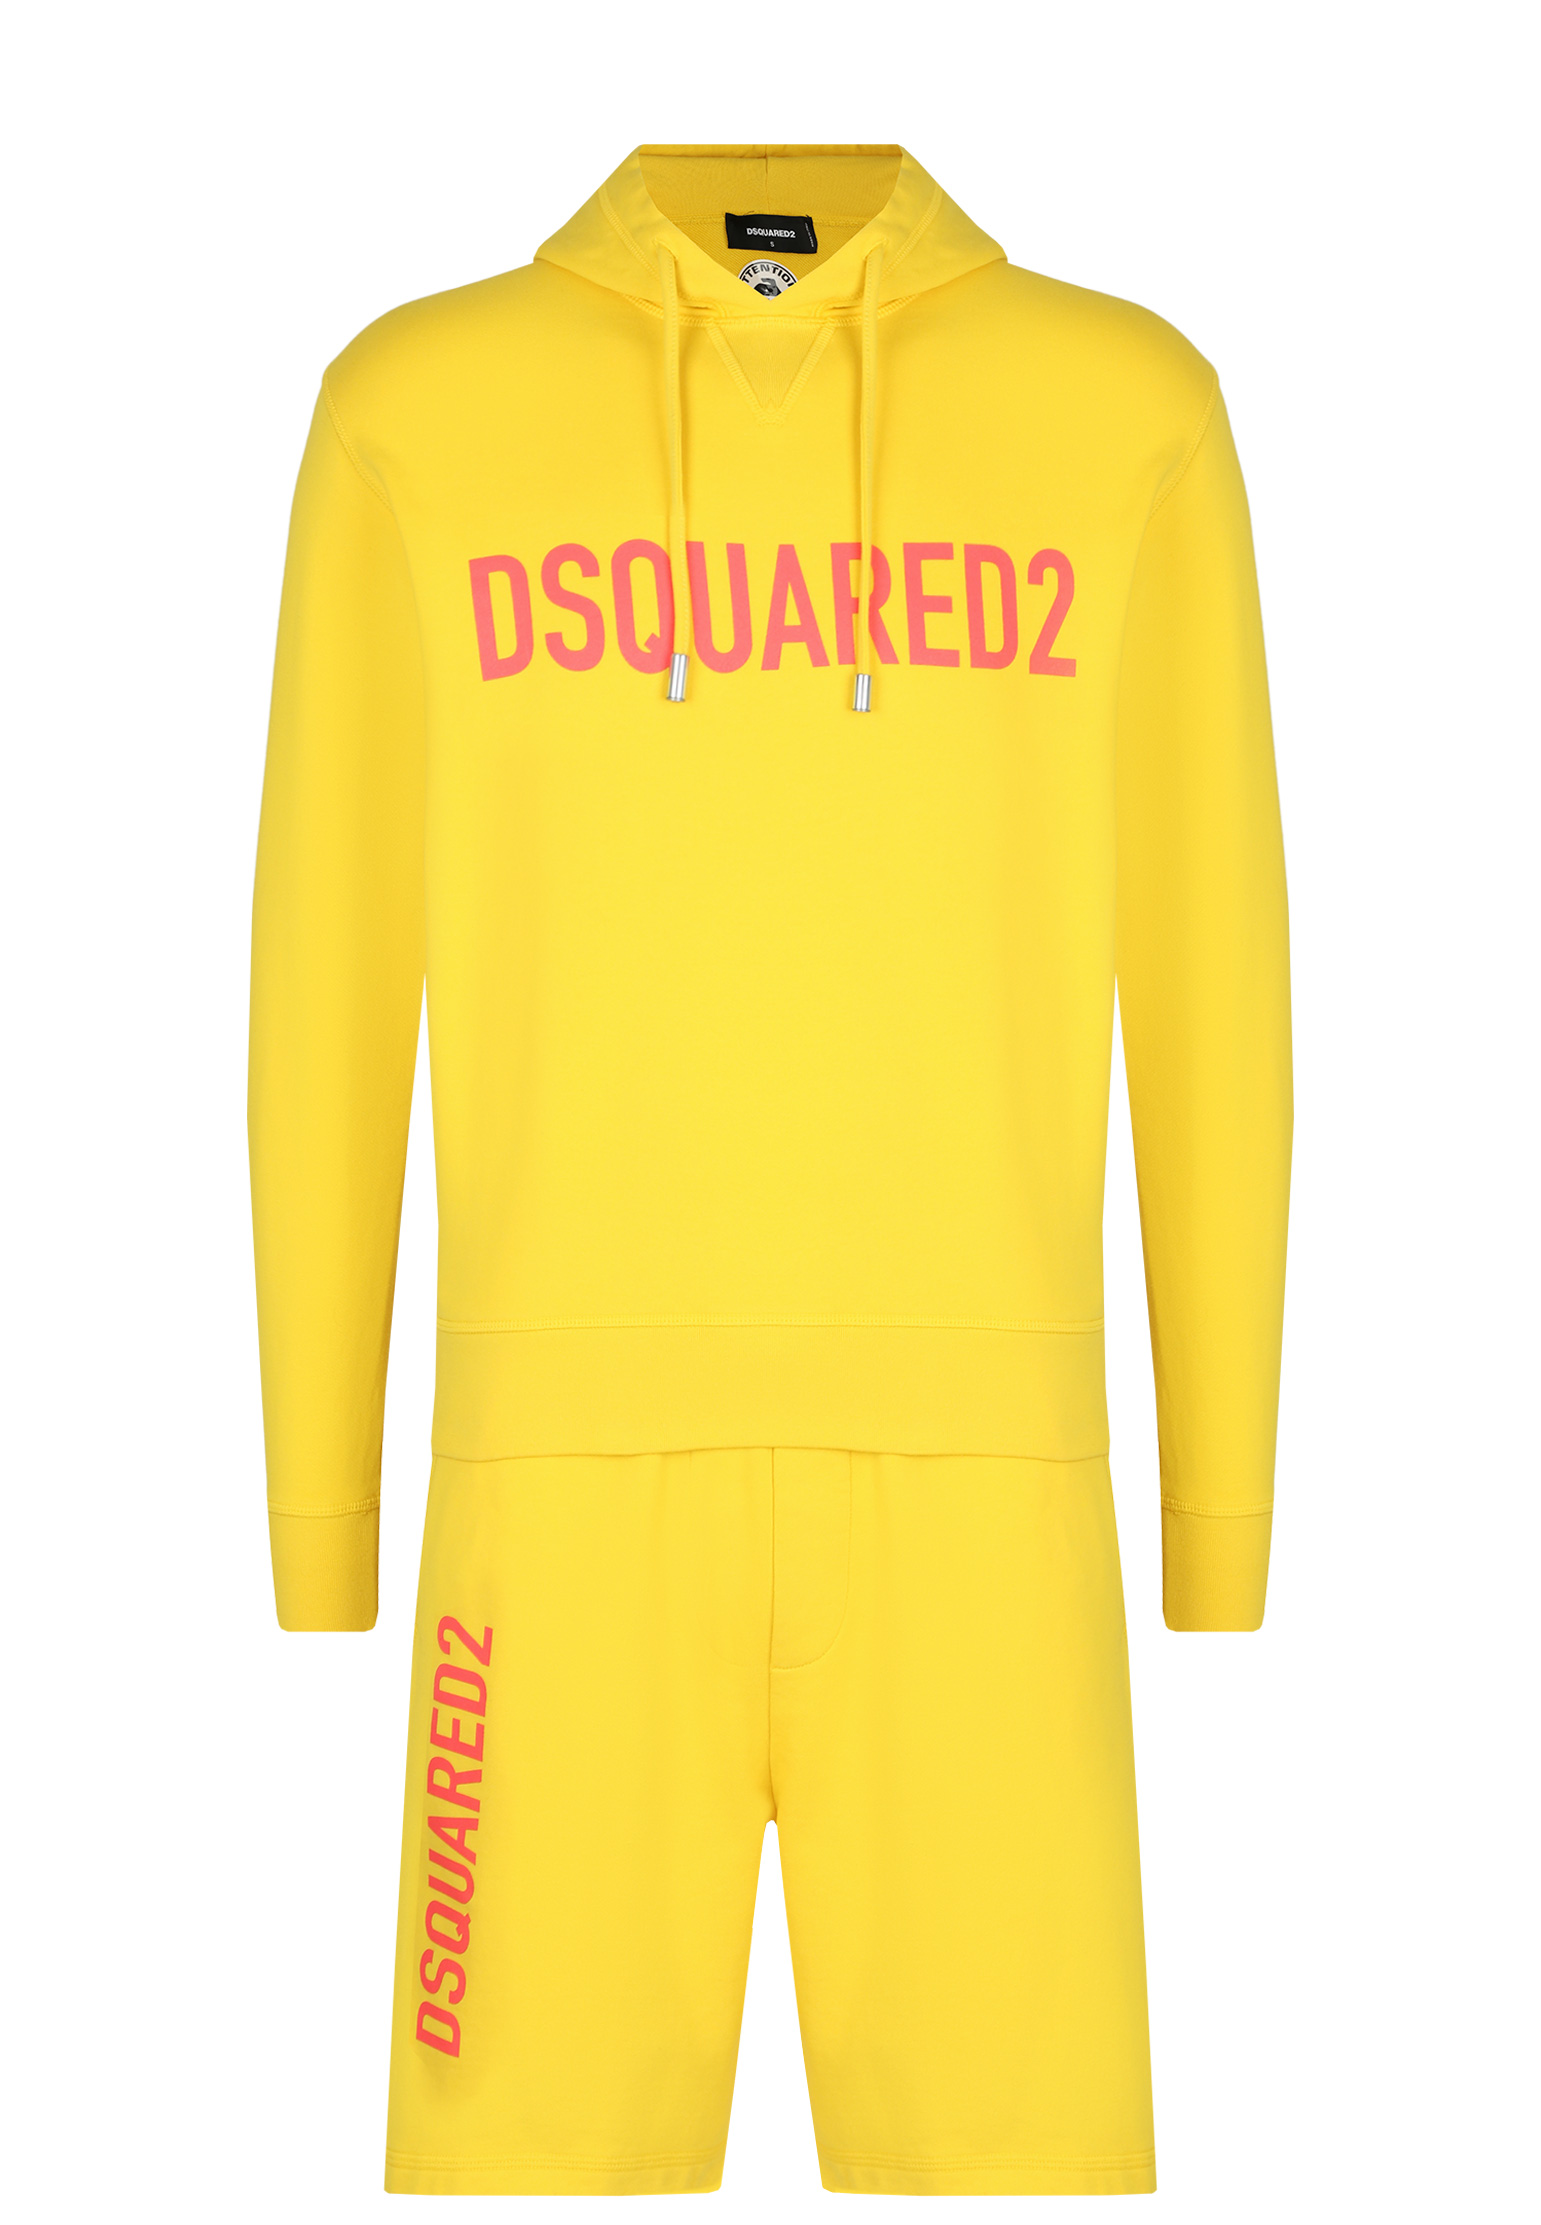 Спортивный костюм DSQUARED2 желтого цвета